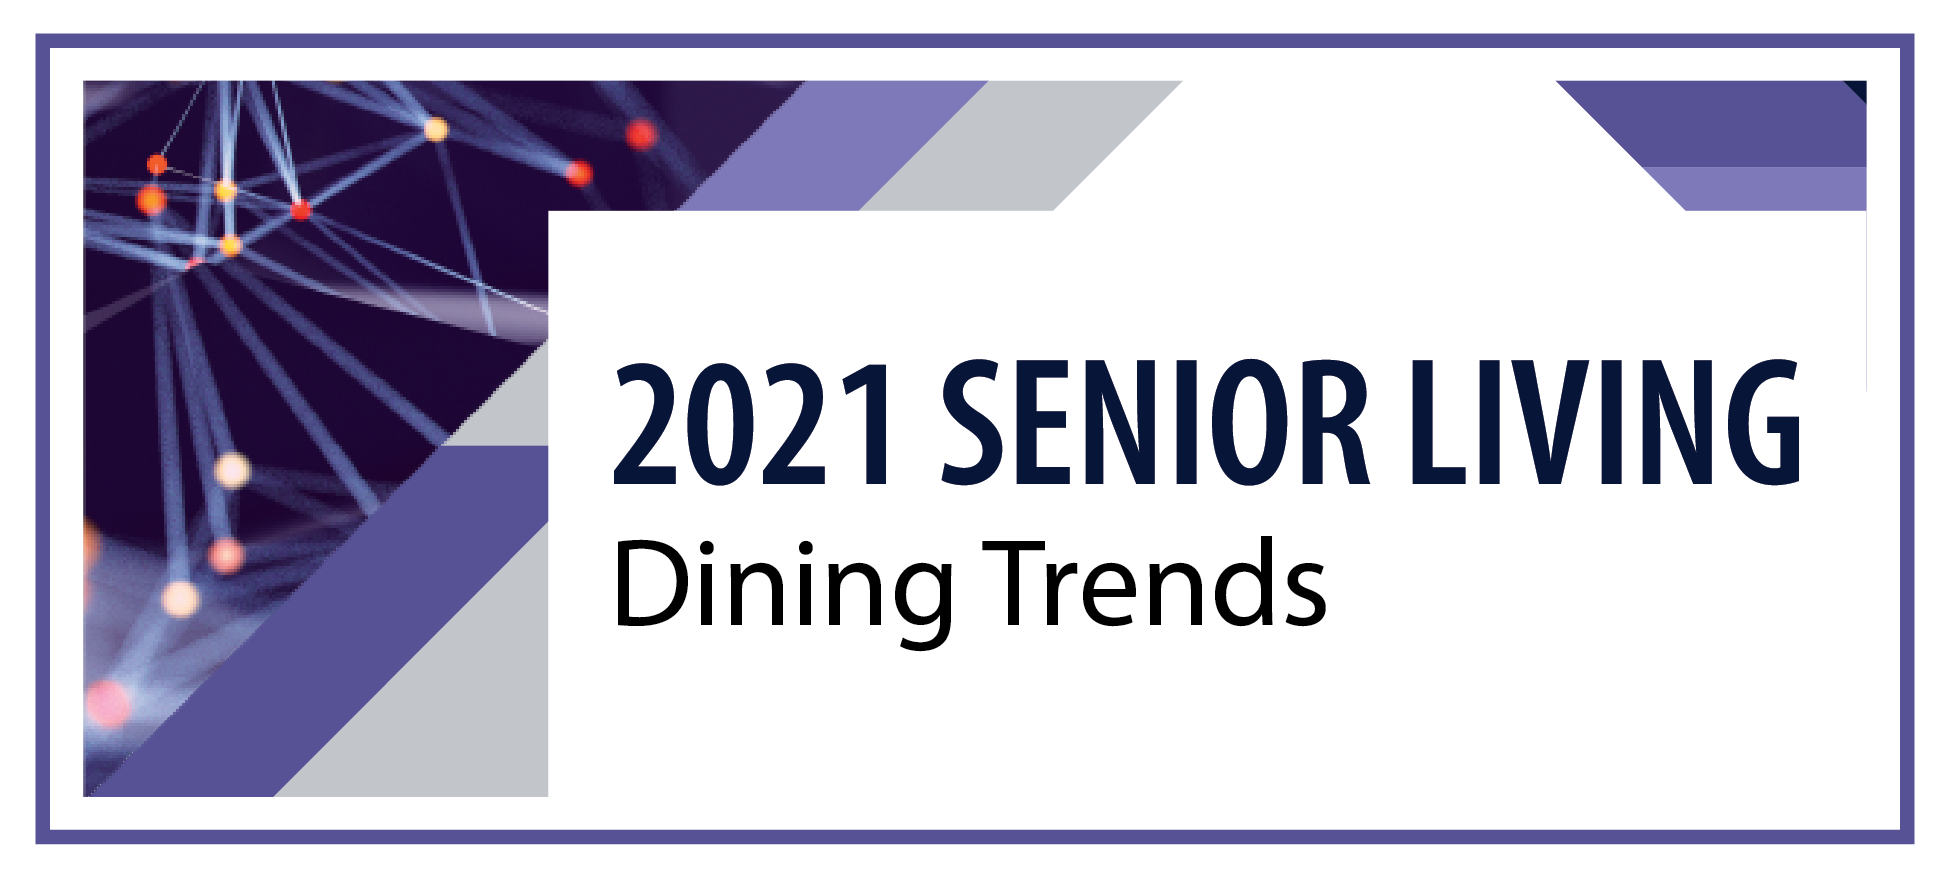 Trends_CTA_Dining